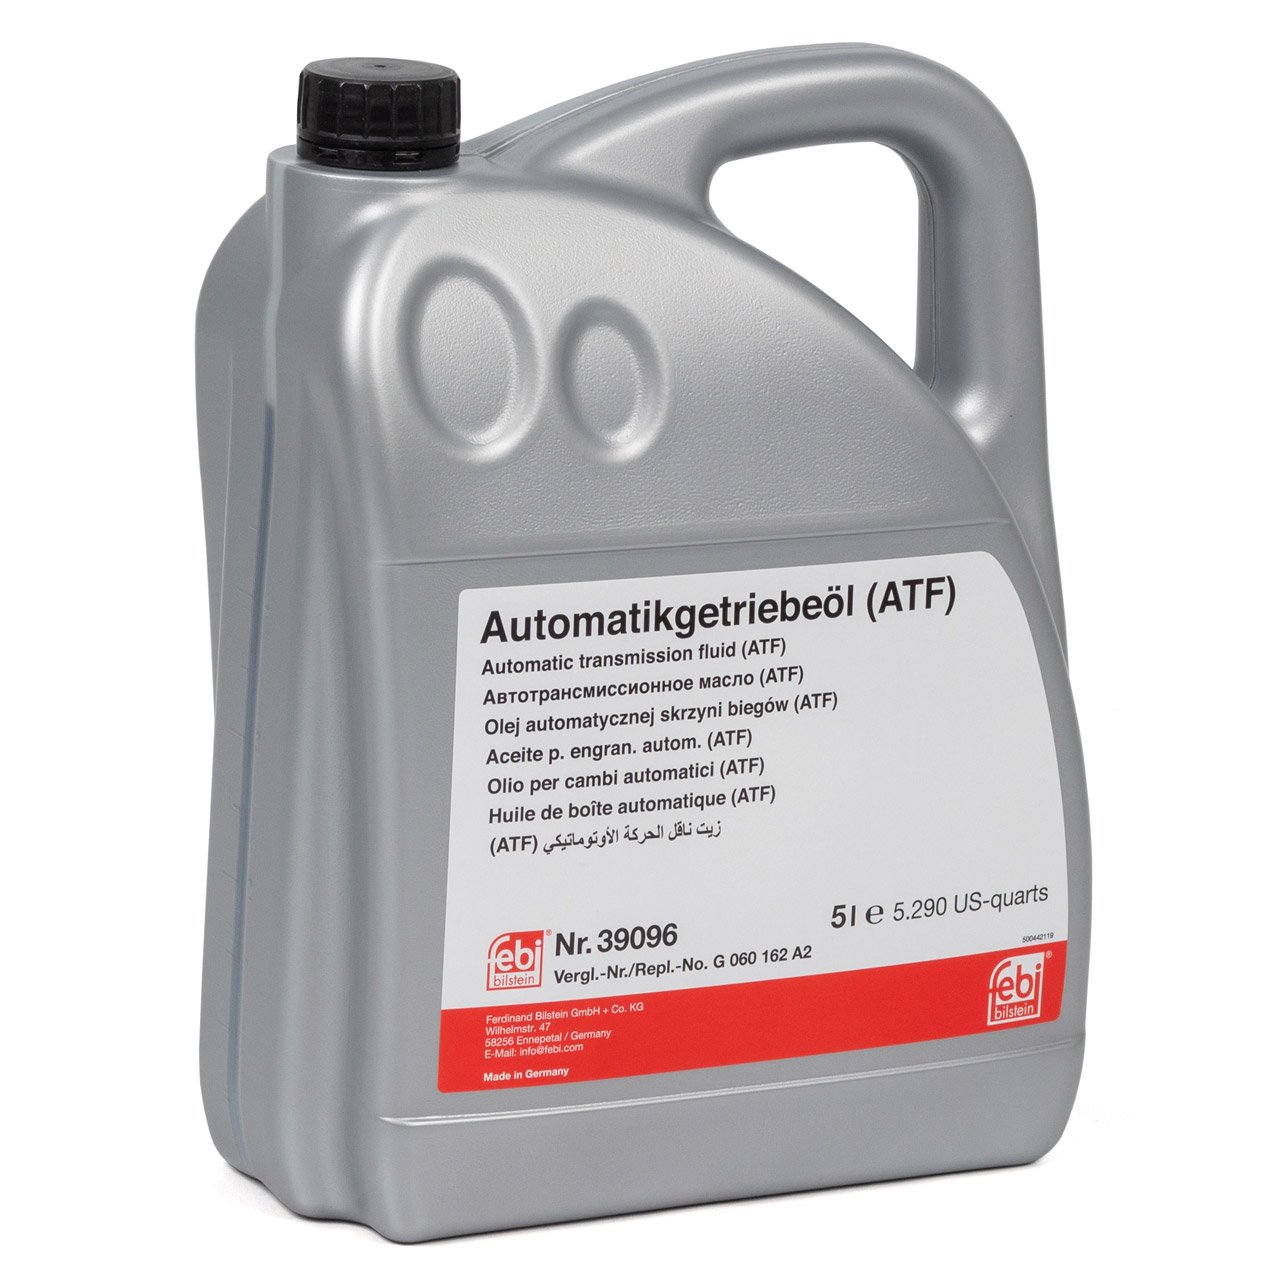 9L 9 Liter FEBI Automatikgetriebeöl ATF GRÜN für AUDI BMW CHRYSLER JAGUAR